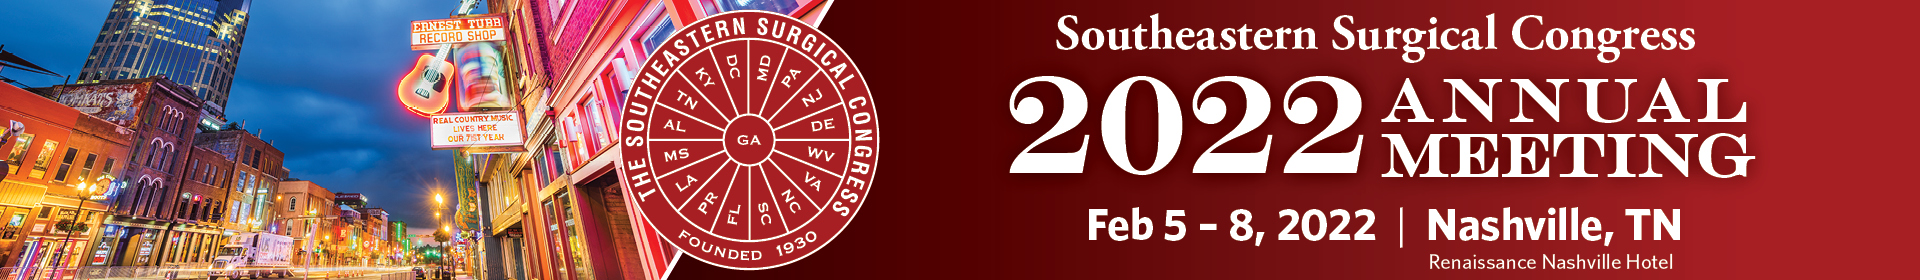 SESC 2022 Annual Meeting Event Banner